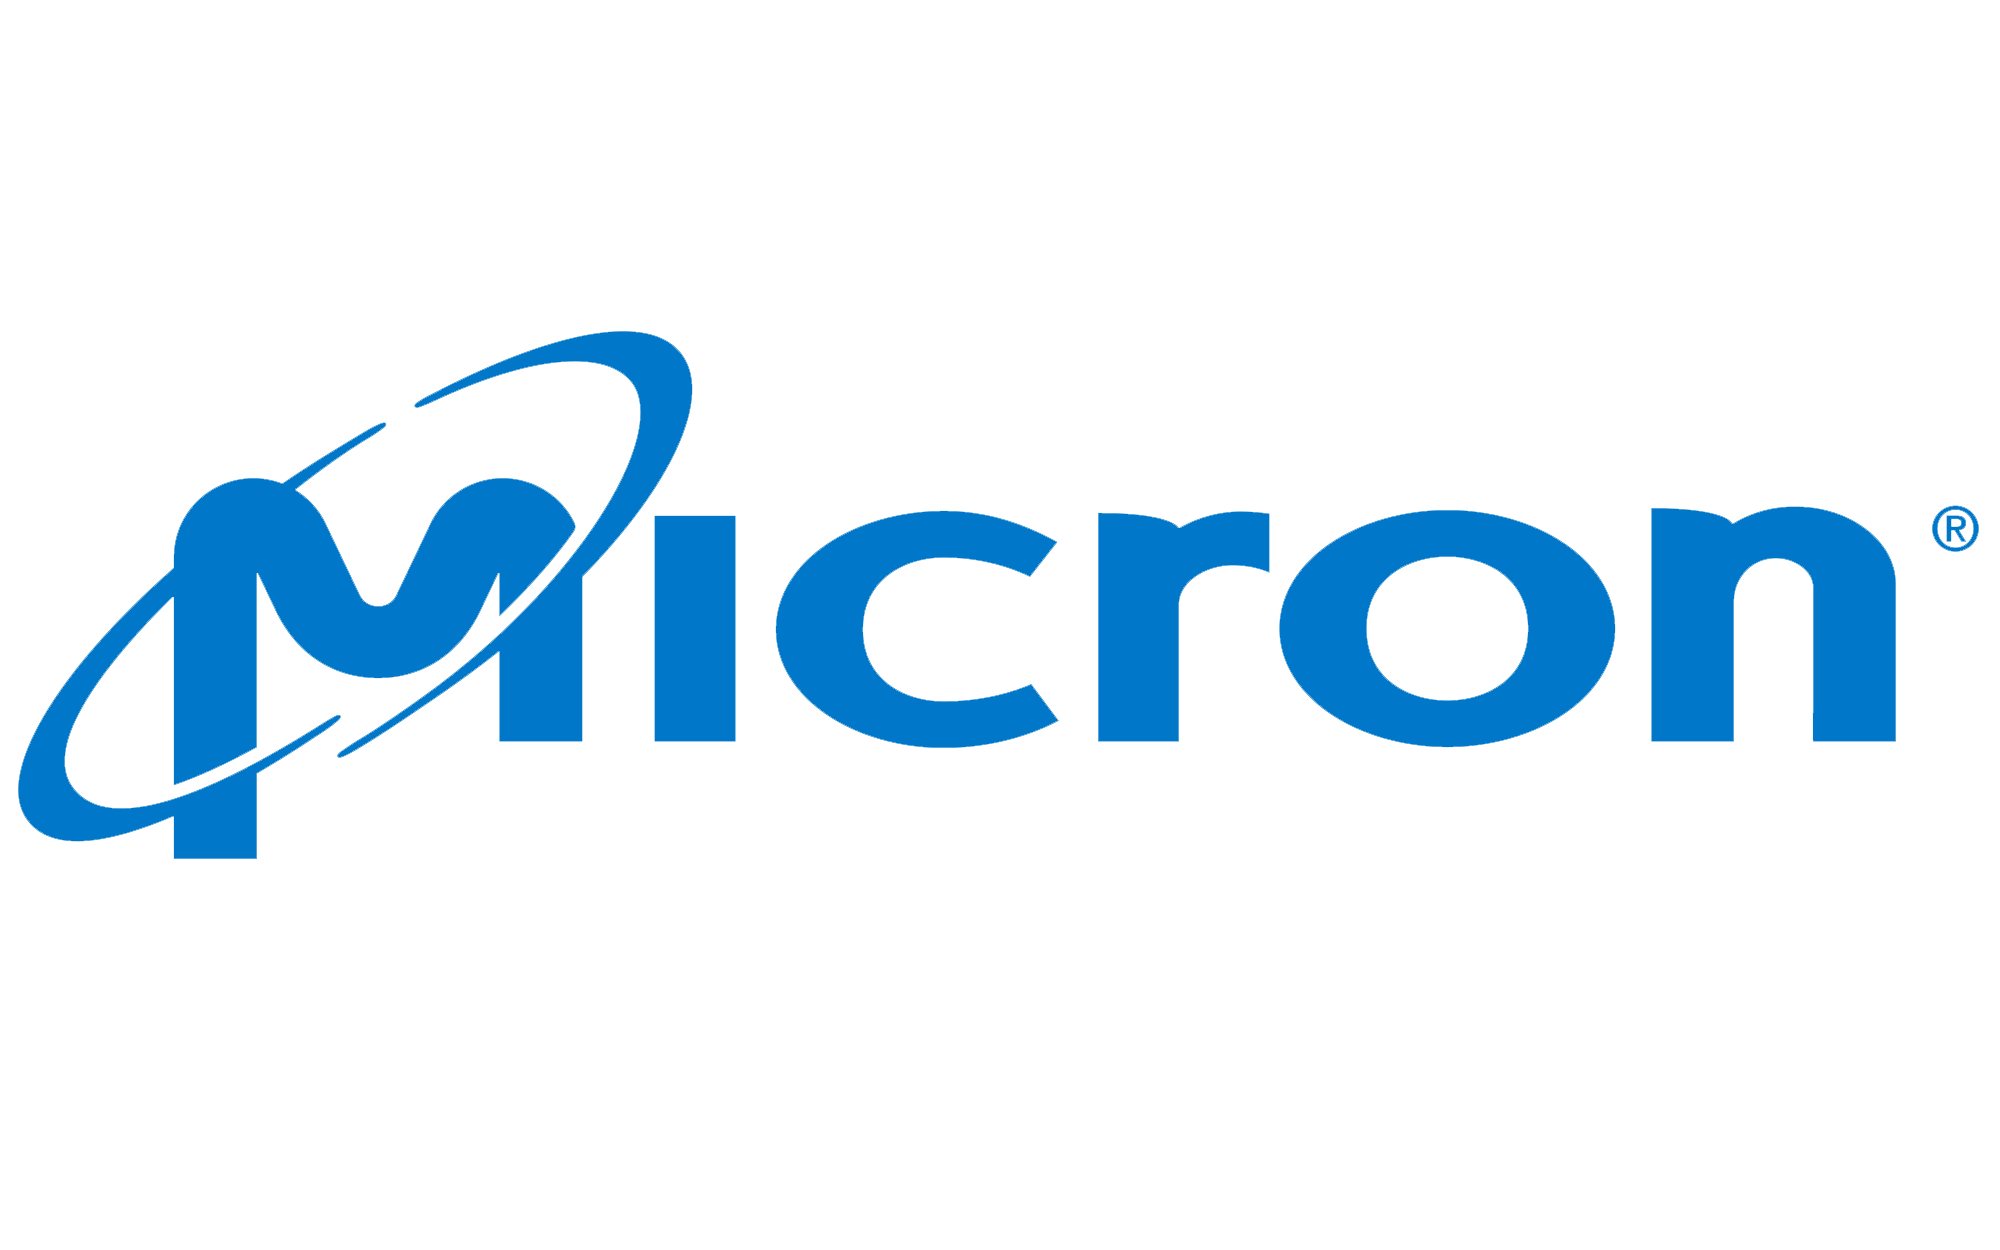 Micron 8GB PC4-17000 DDR4-2133MHz non-ECC Unbuffered CL15 260-Pin SoDimm